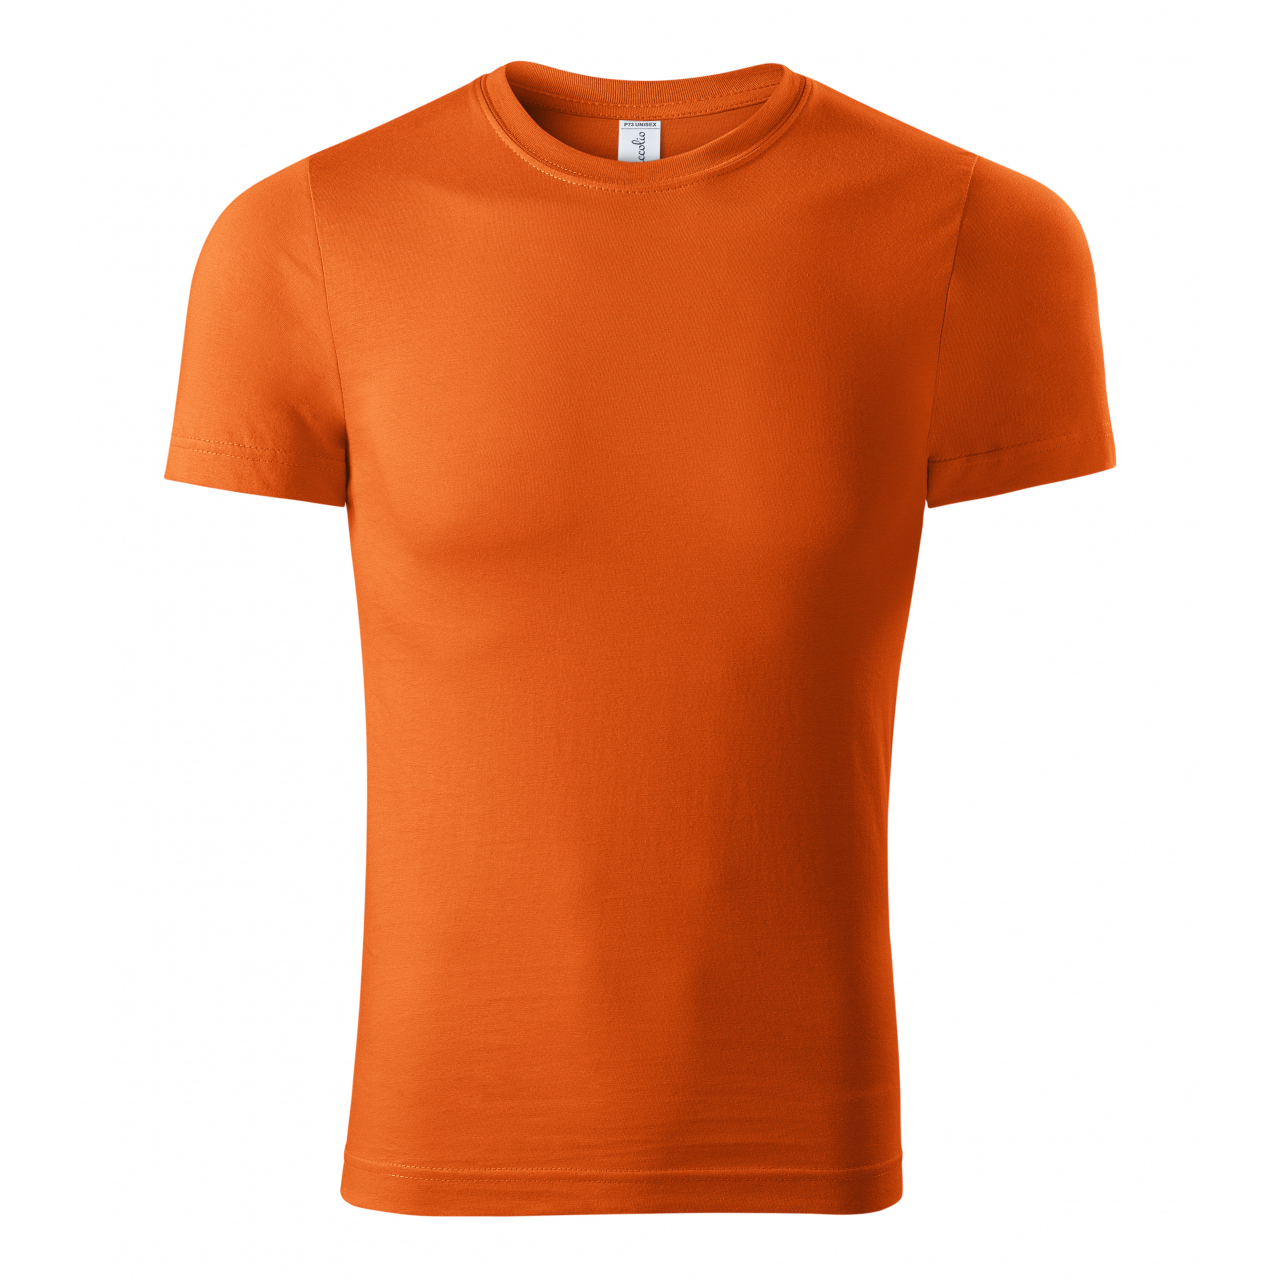 Tričko unisex Piccolio Paint - oranžové, XS